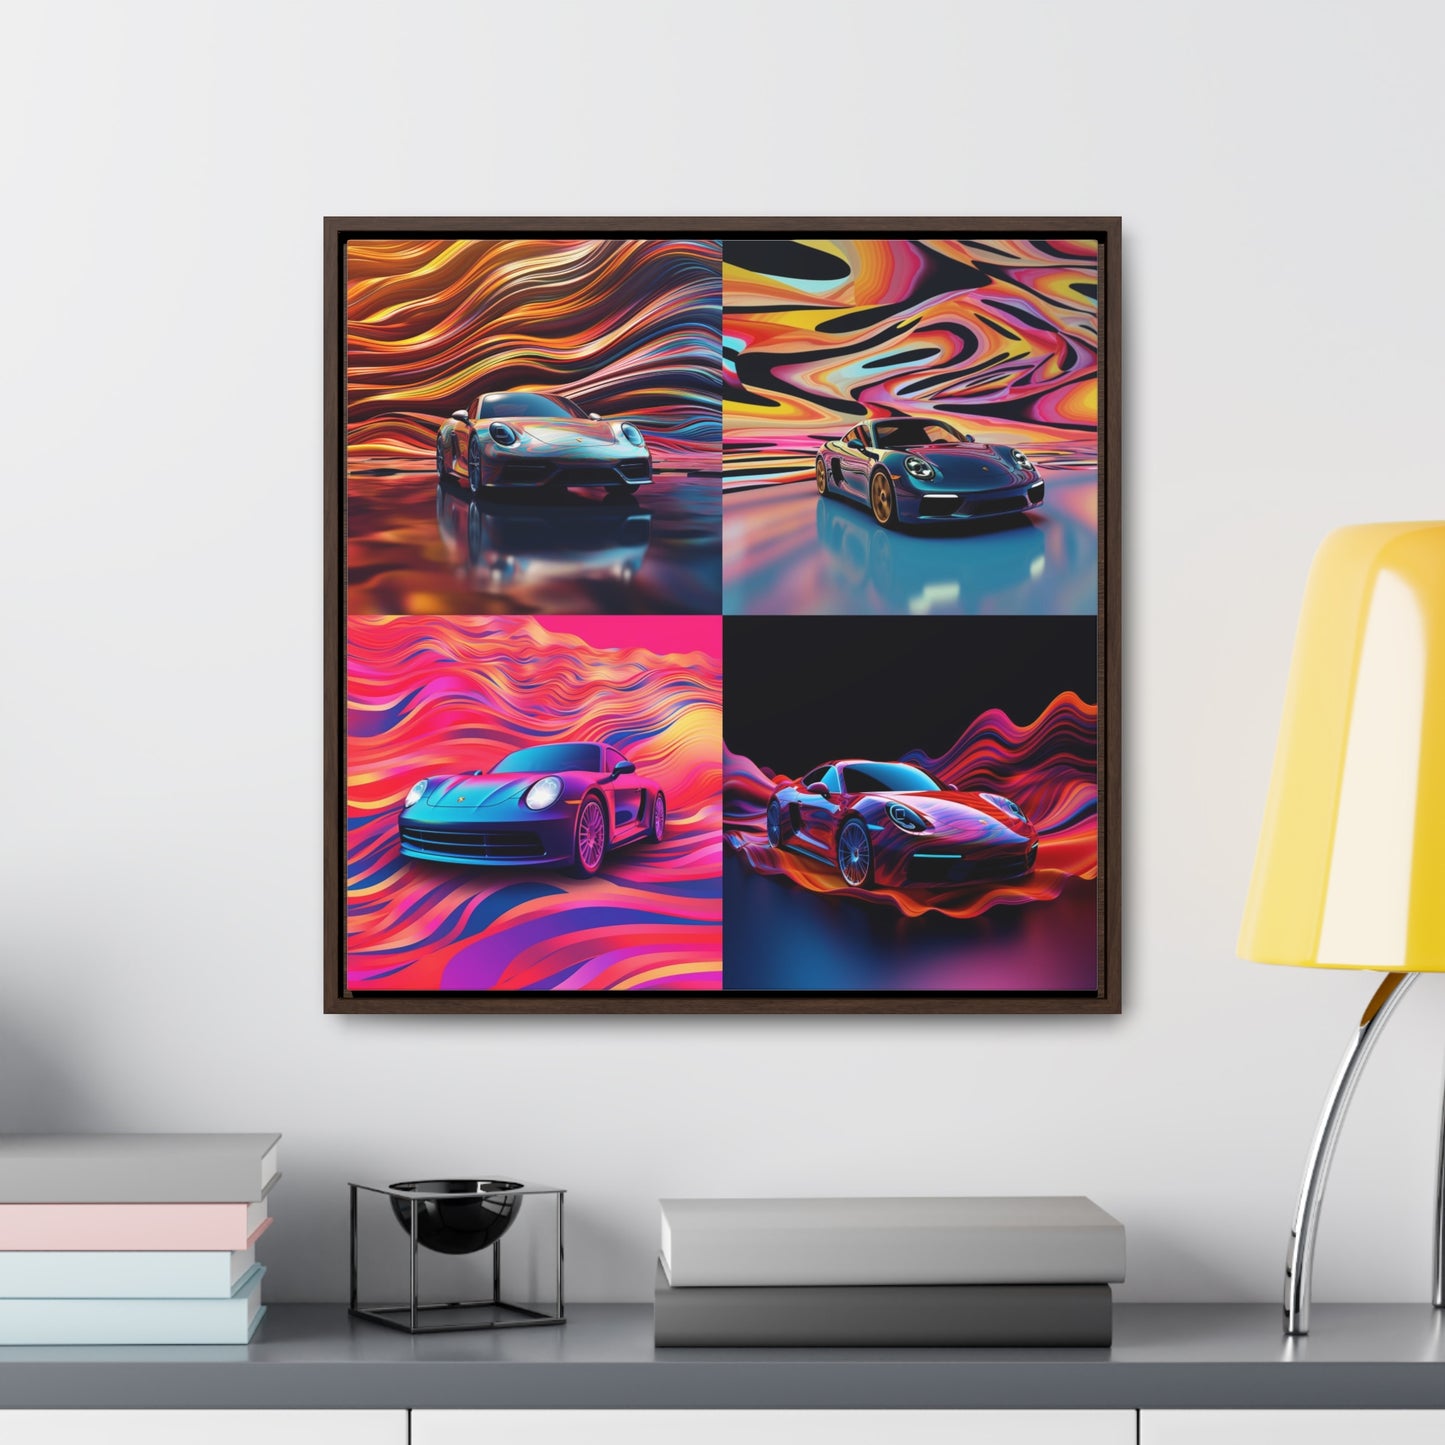 Gallery Canvas Wraps, Square Frame Porsche Water Fusion 5